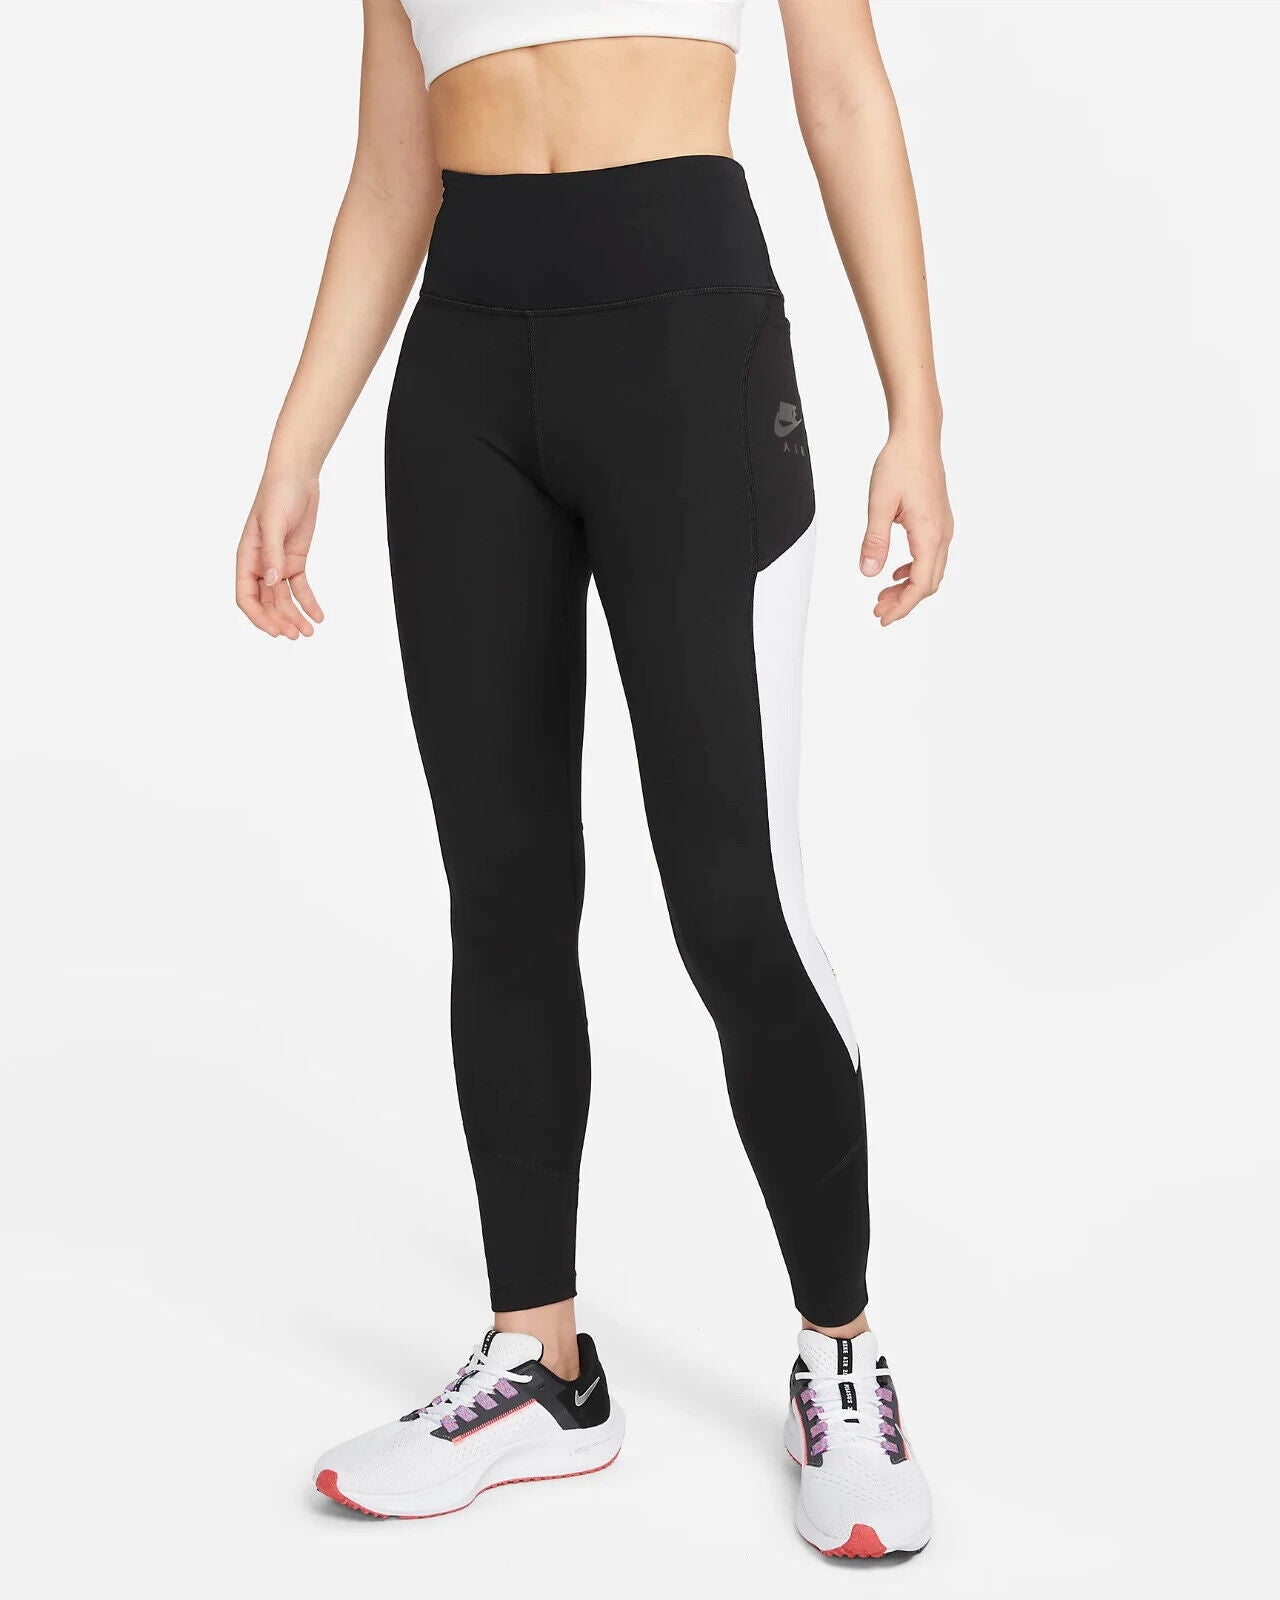 NEW Women's Nike Air Fast Tight Fit 7/8 Running Leggings DM7487-010 Small